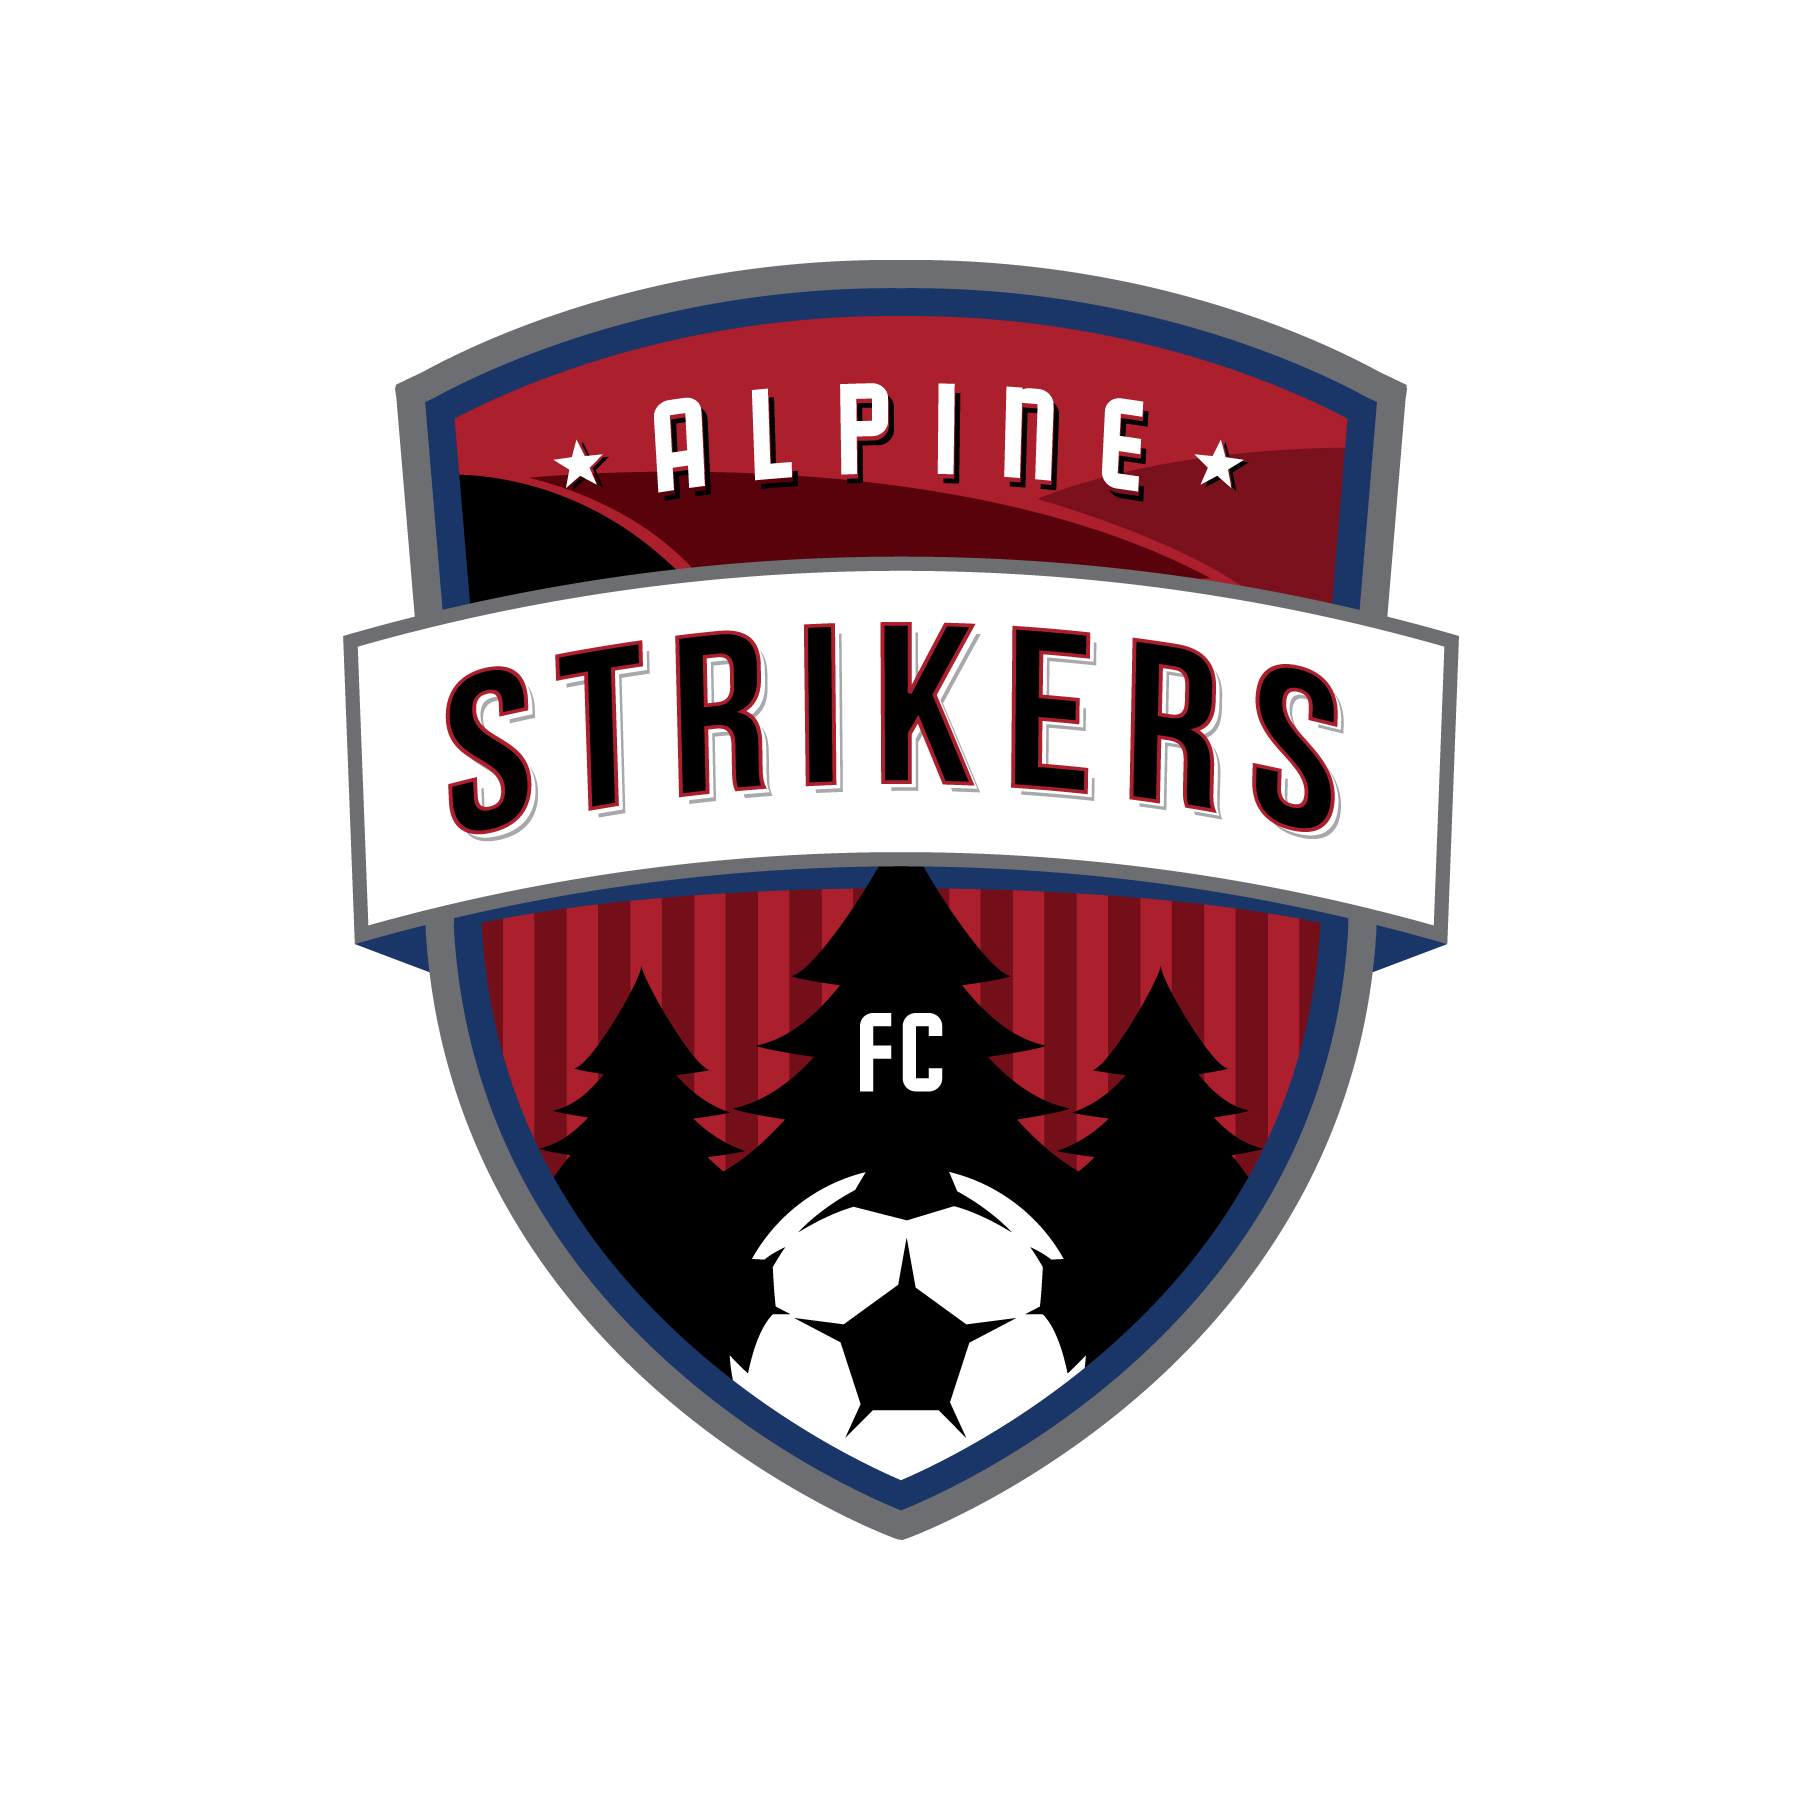 Alpine Strikers FC team badge